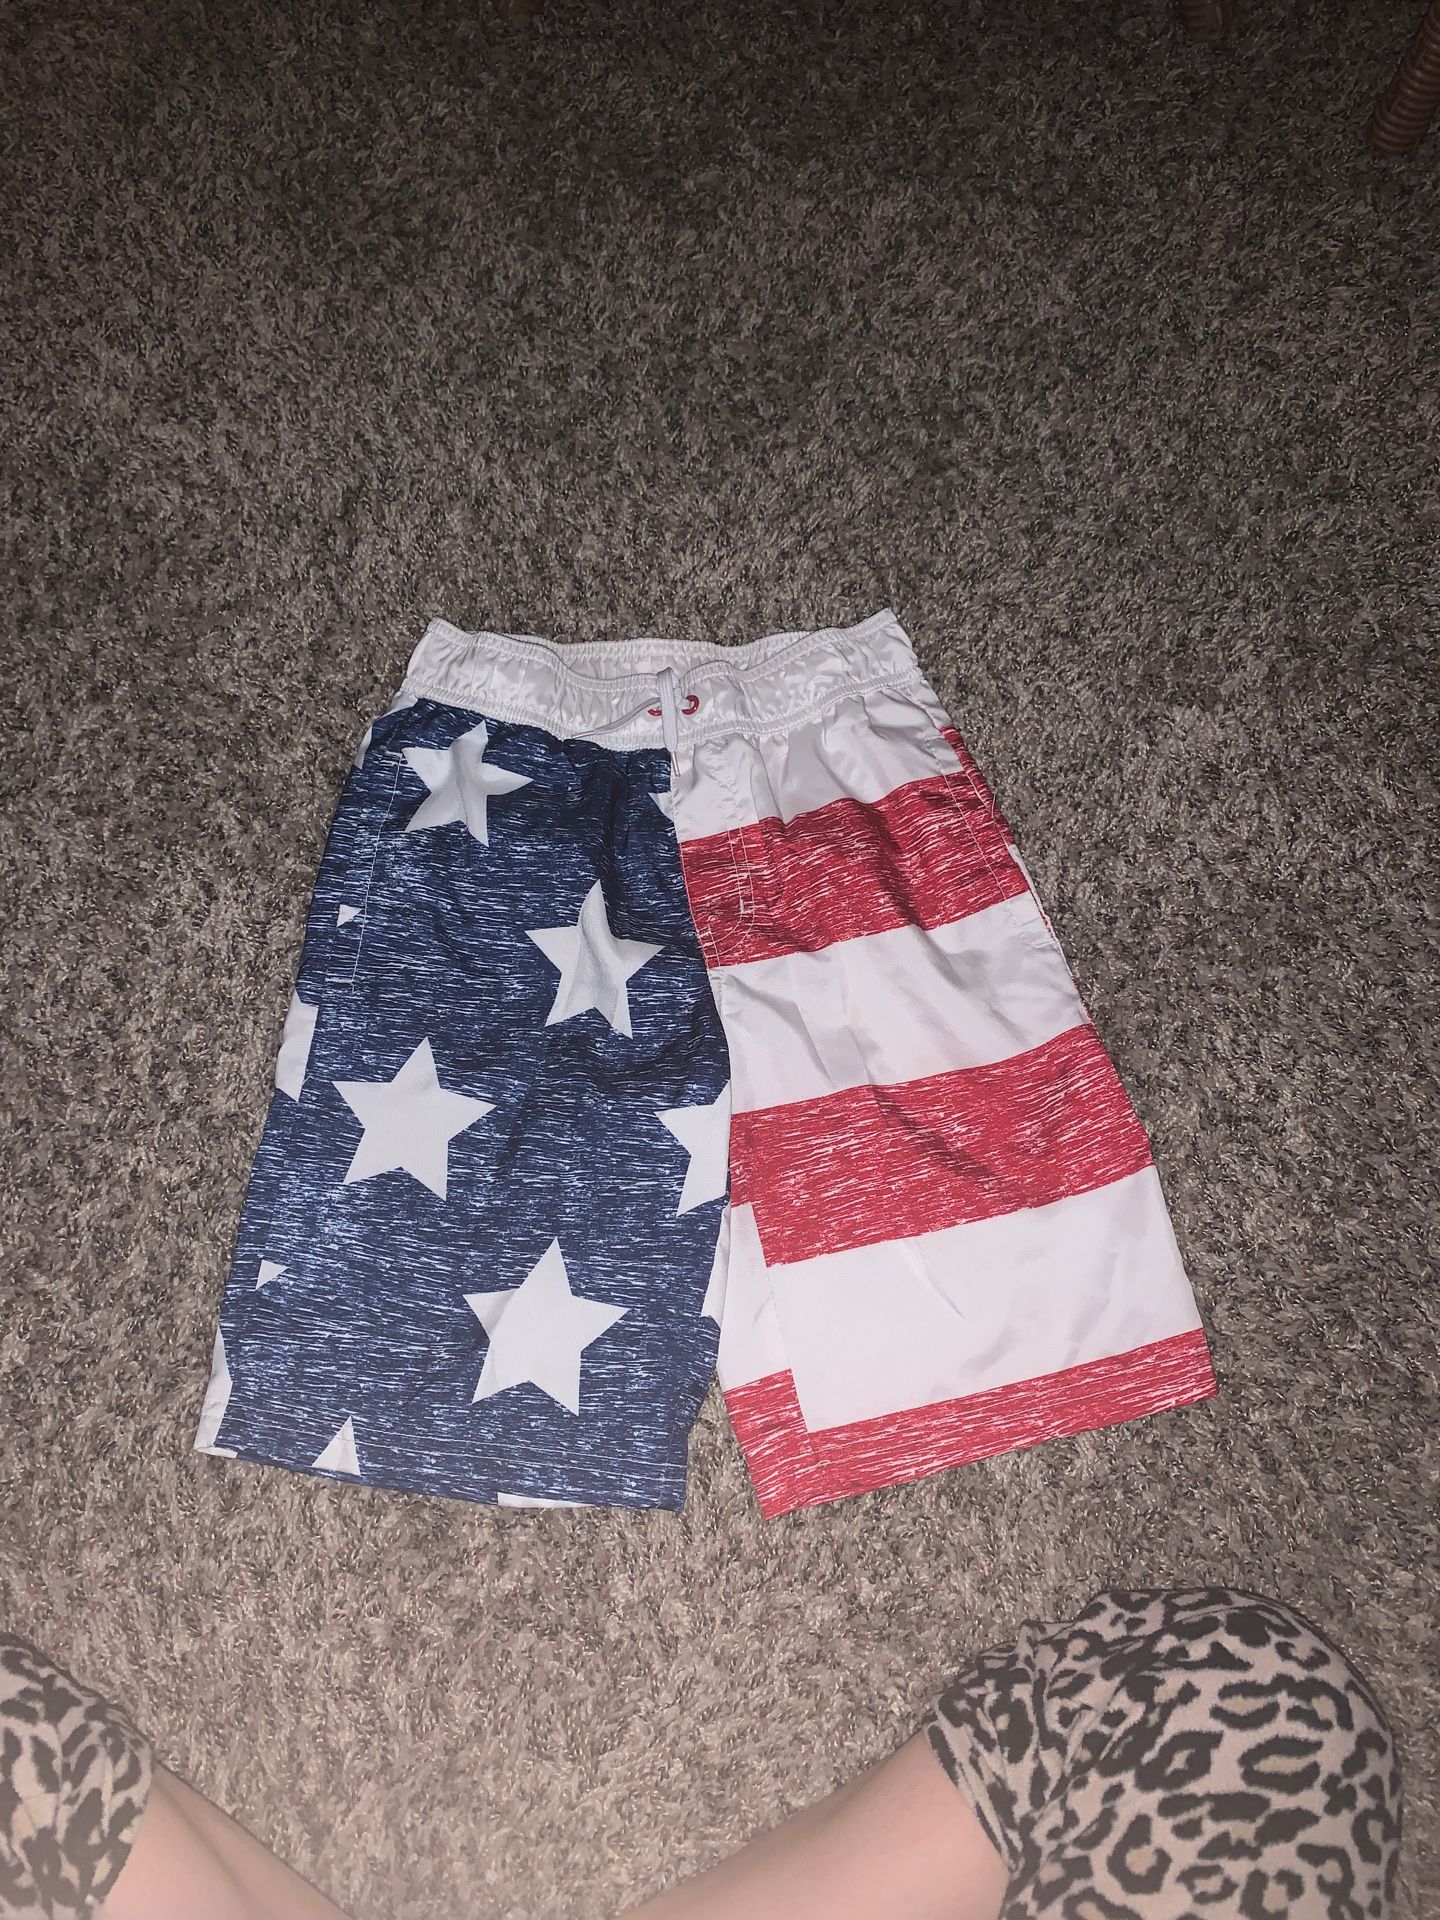 Crazy8 boy American flag swimming trunks